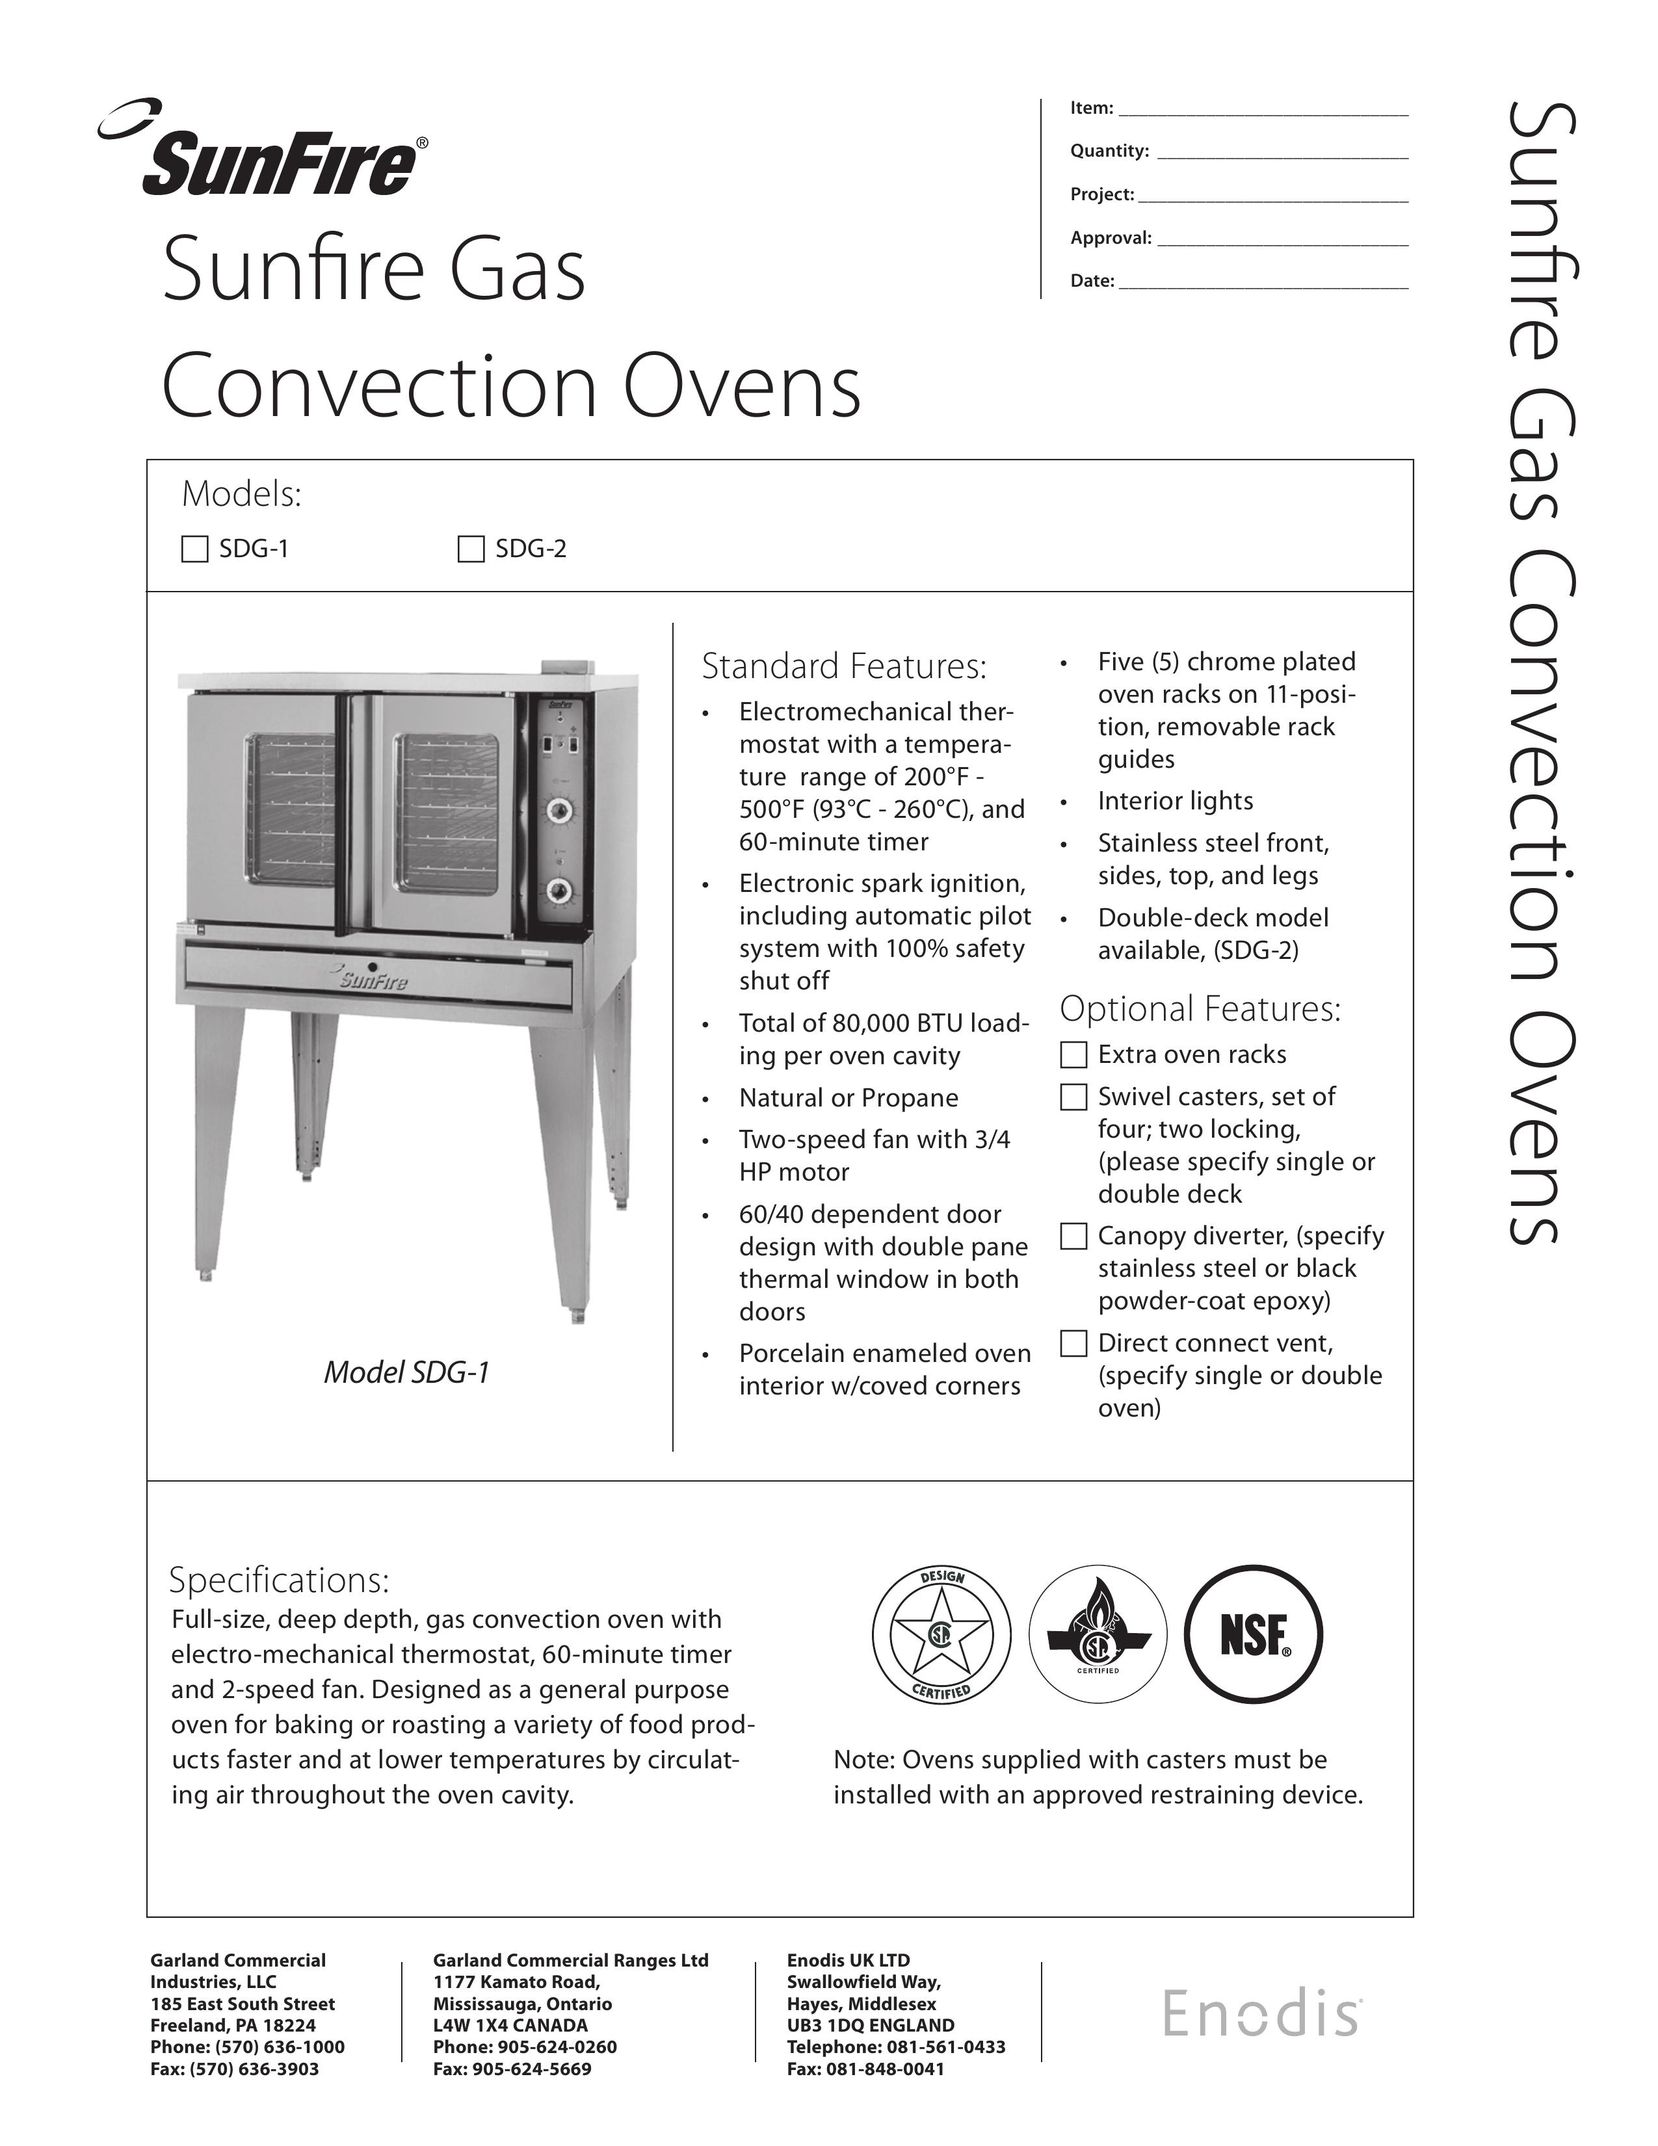 Sunfire SDG-2 Convection Oven User Manual